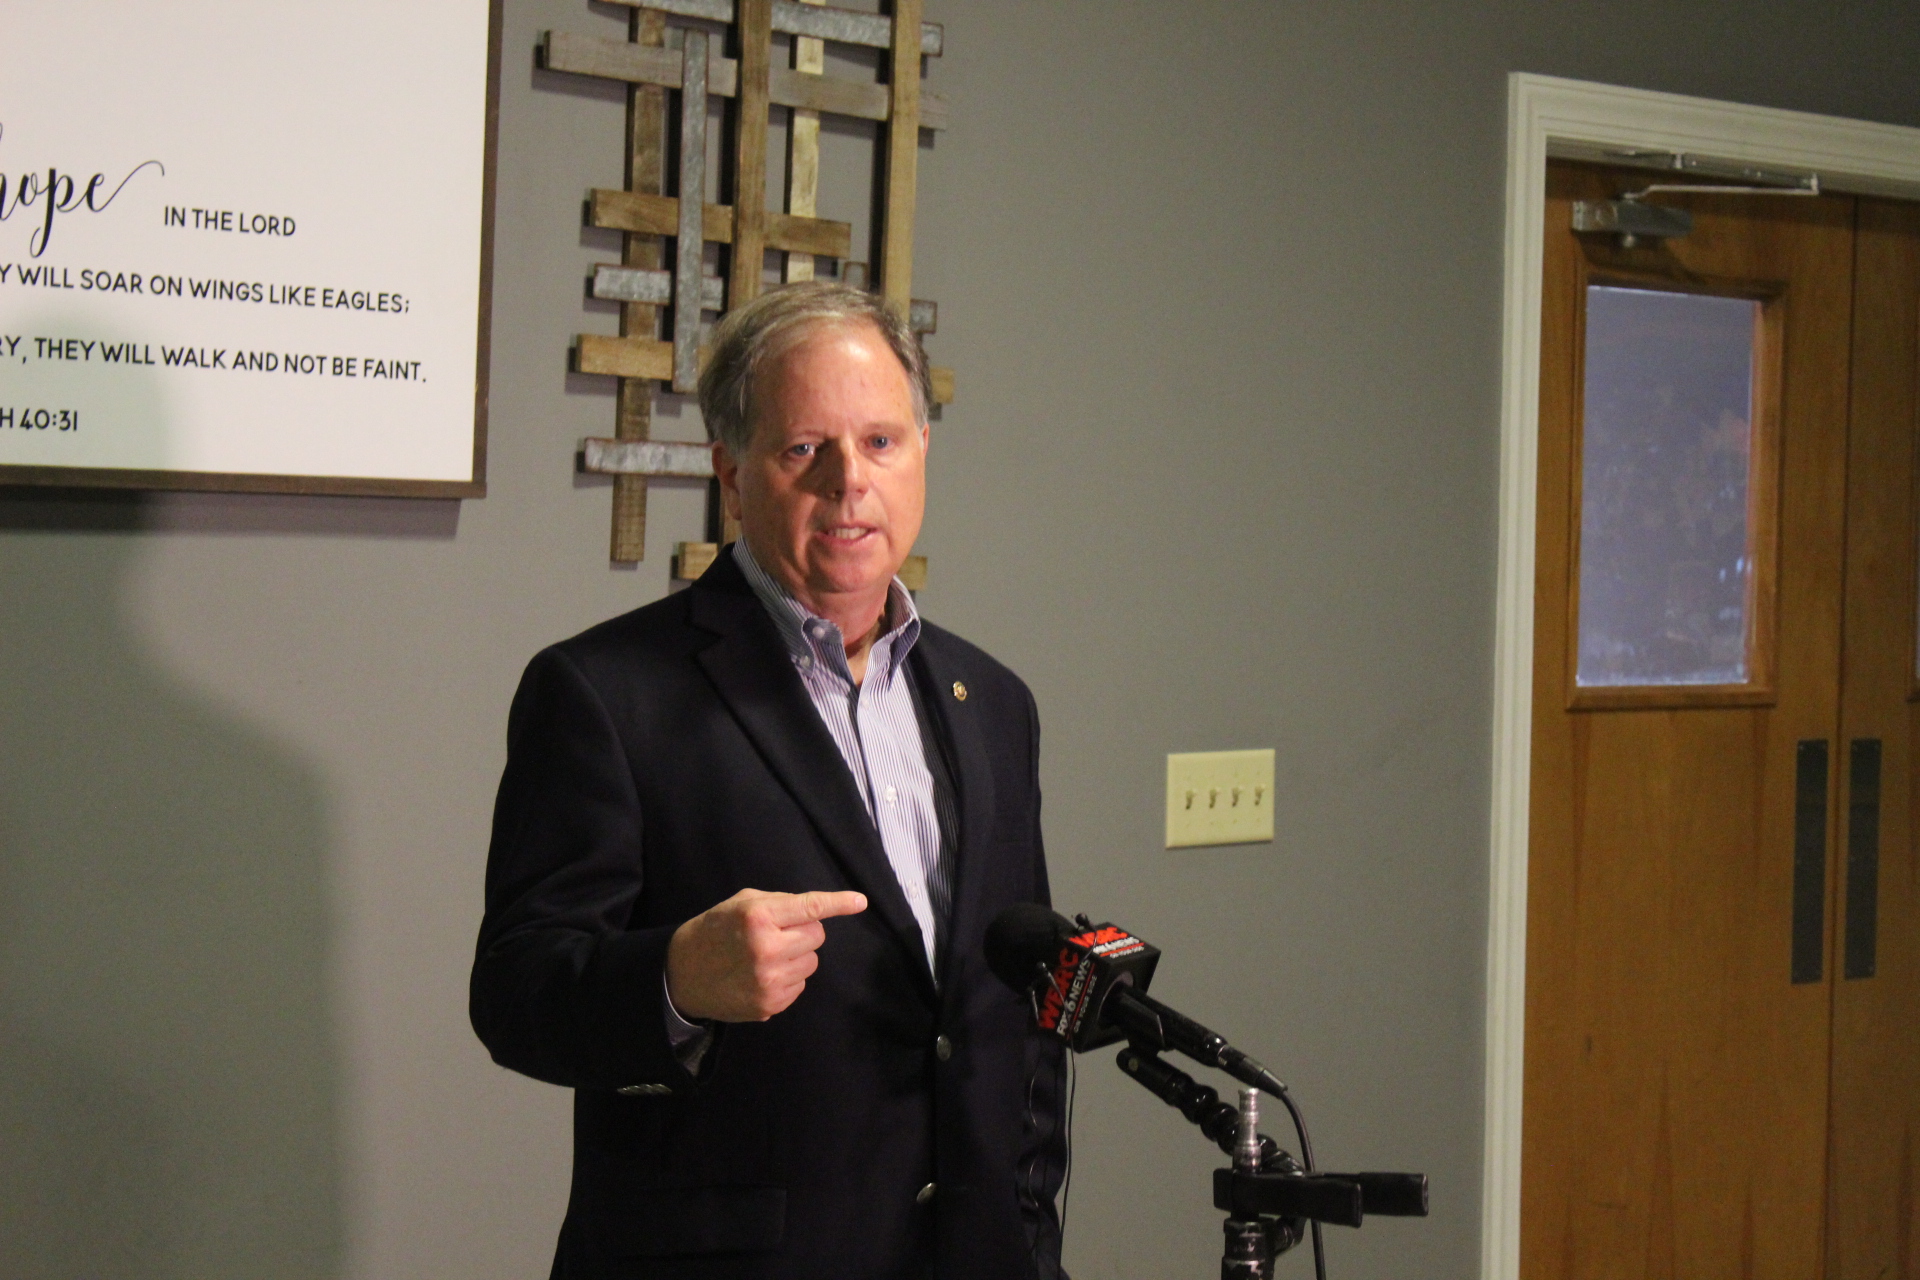 Sen. Doug Jones visits East Alabama to meet with tornado survivors, local leaders on recovery efforts